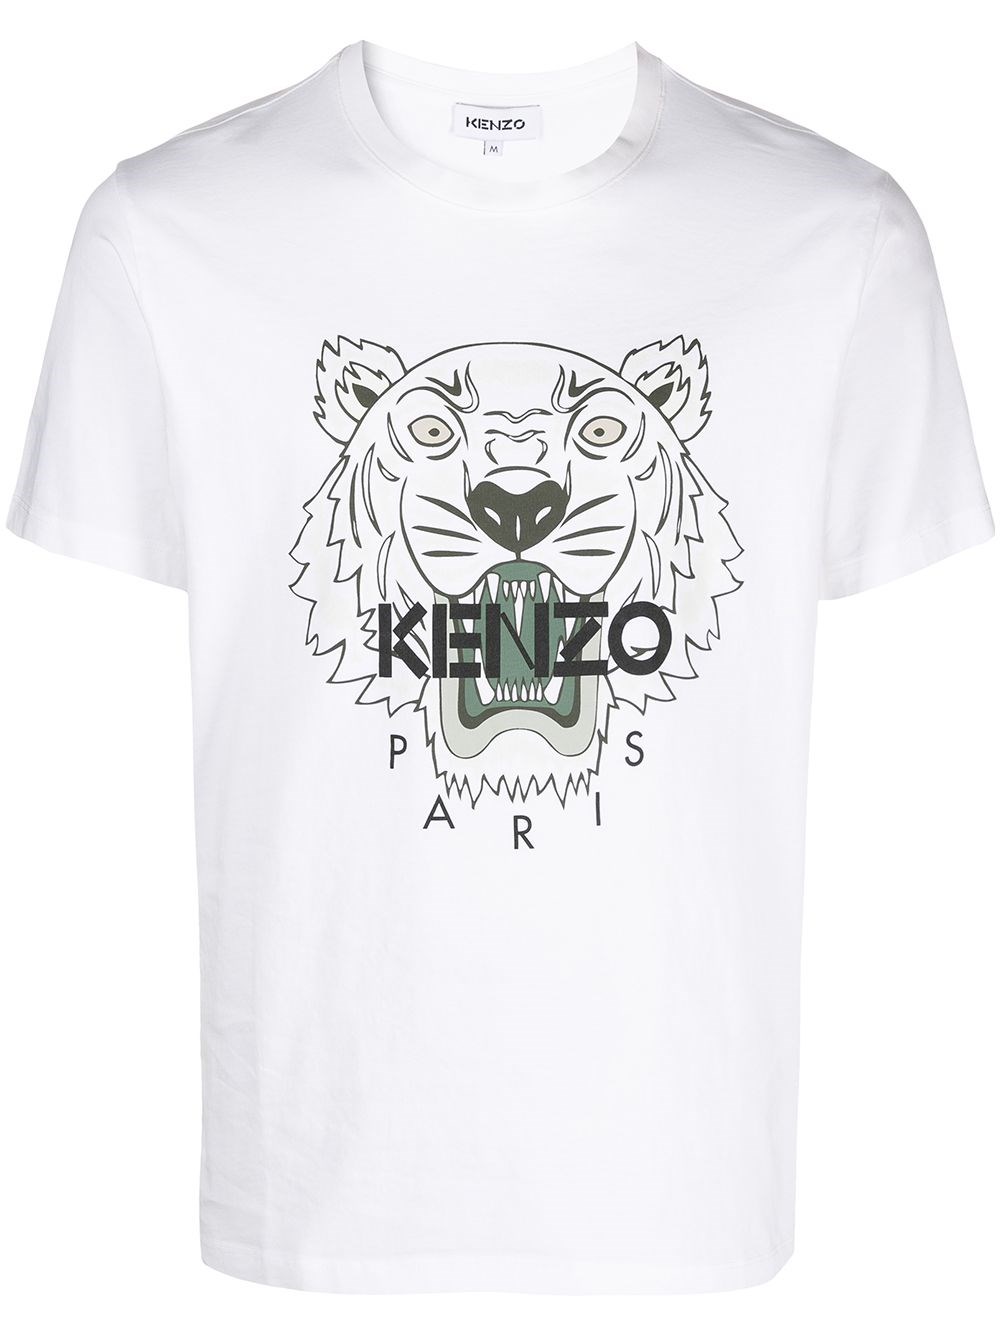 Kenzo Logo Shirt Hotsell, 56% OFF | www.campingcanyelles.com